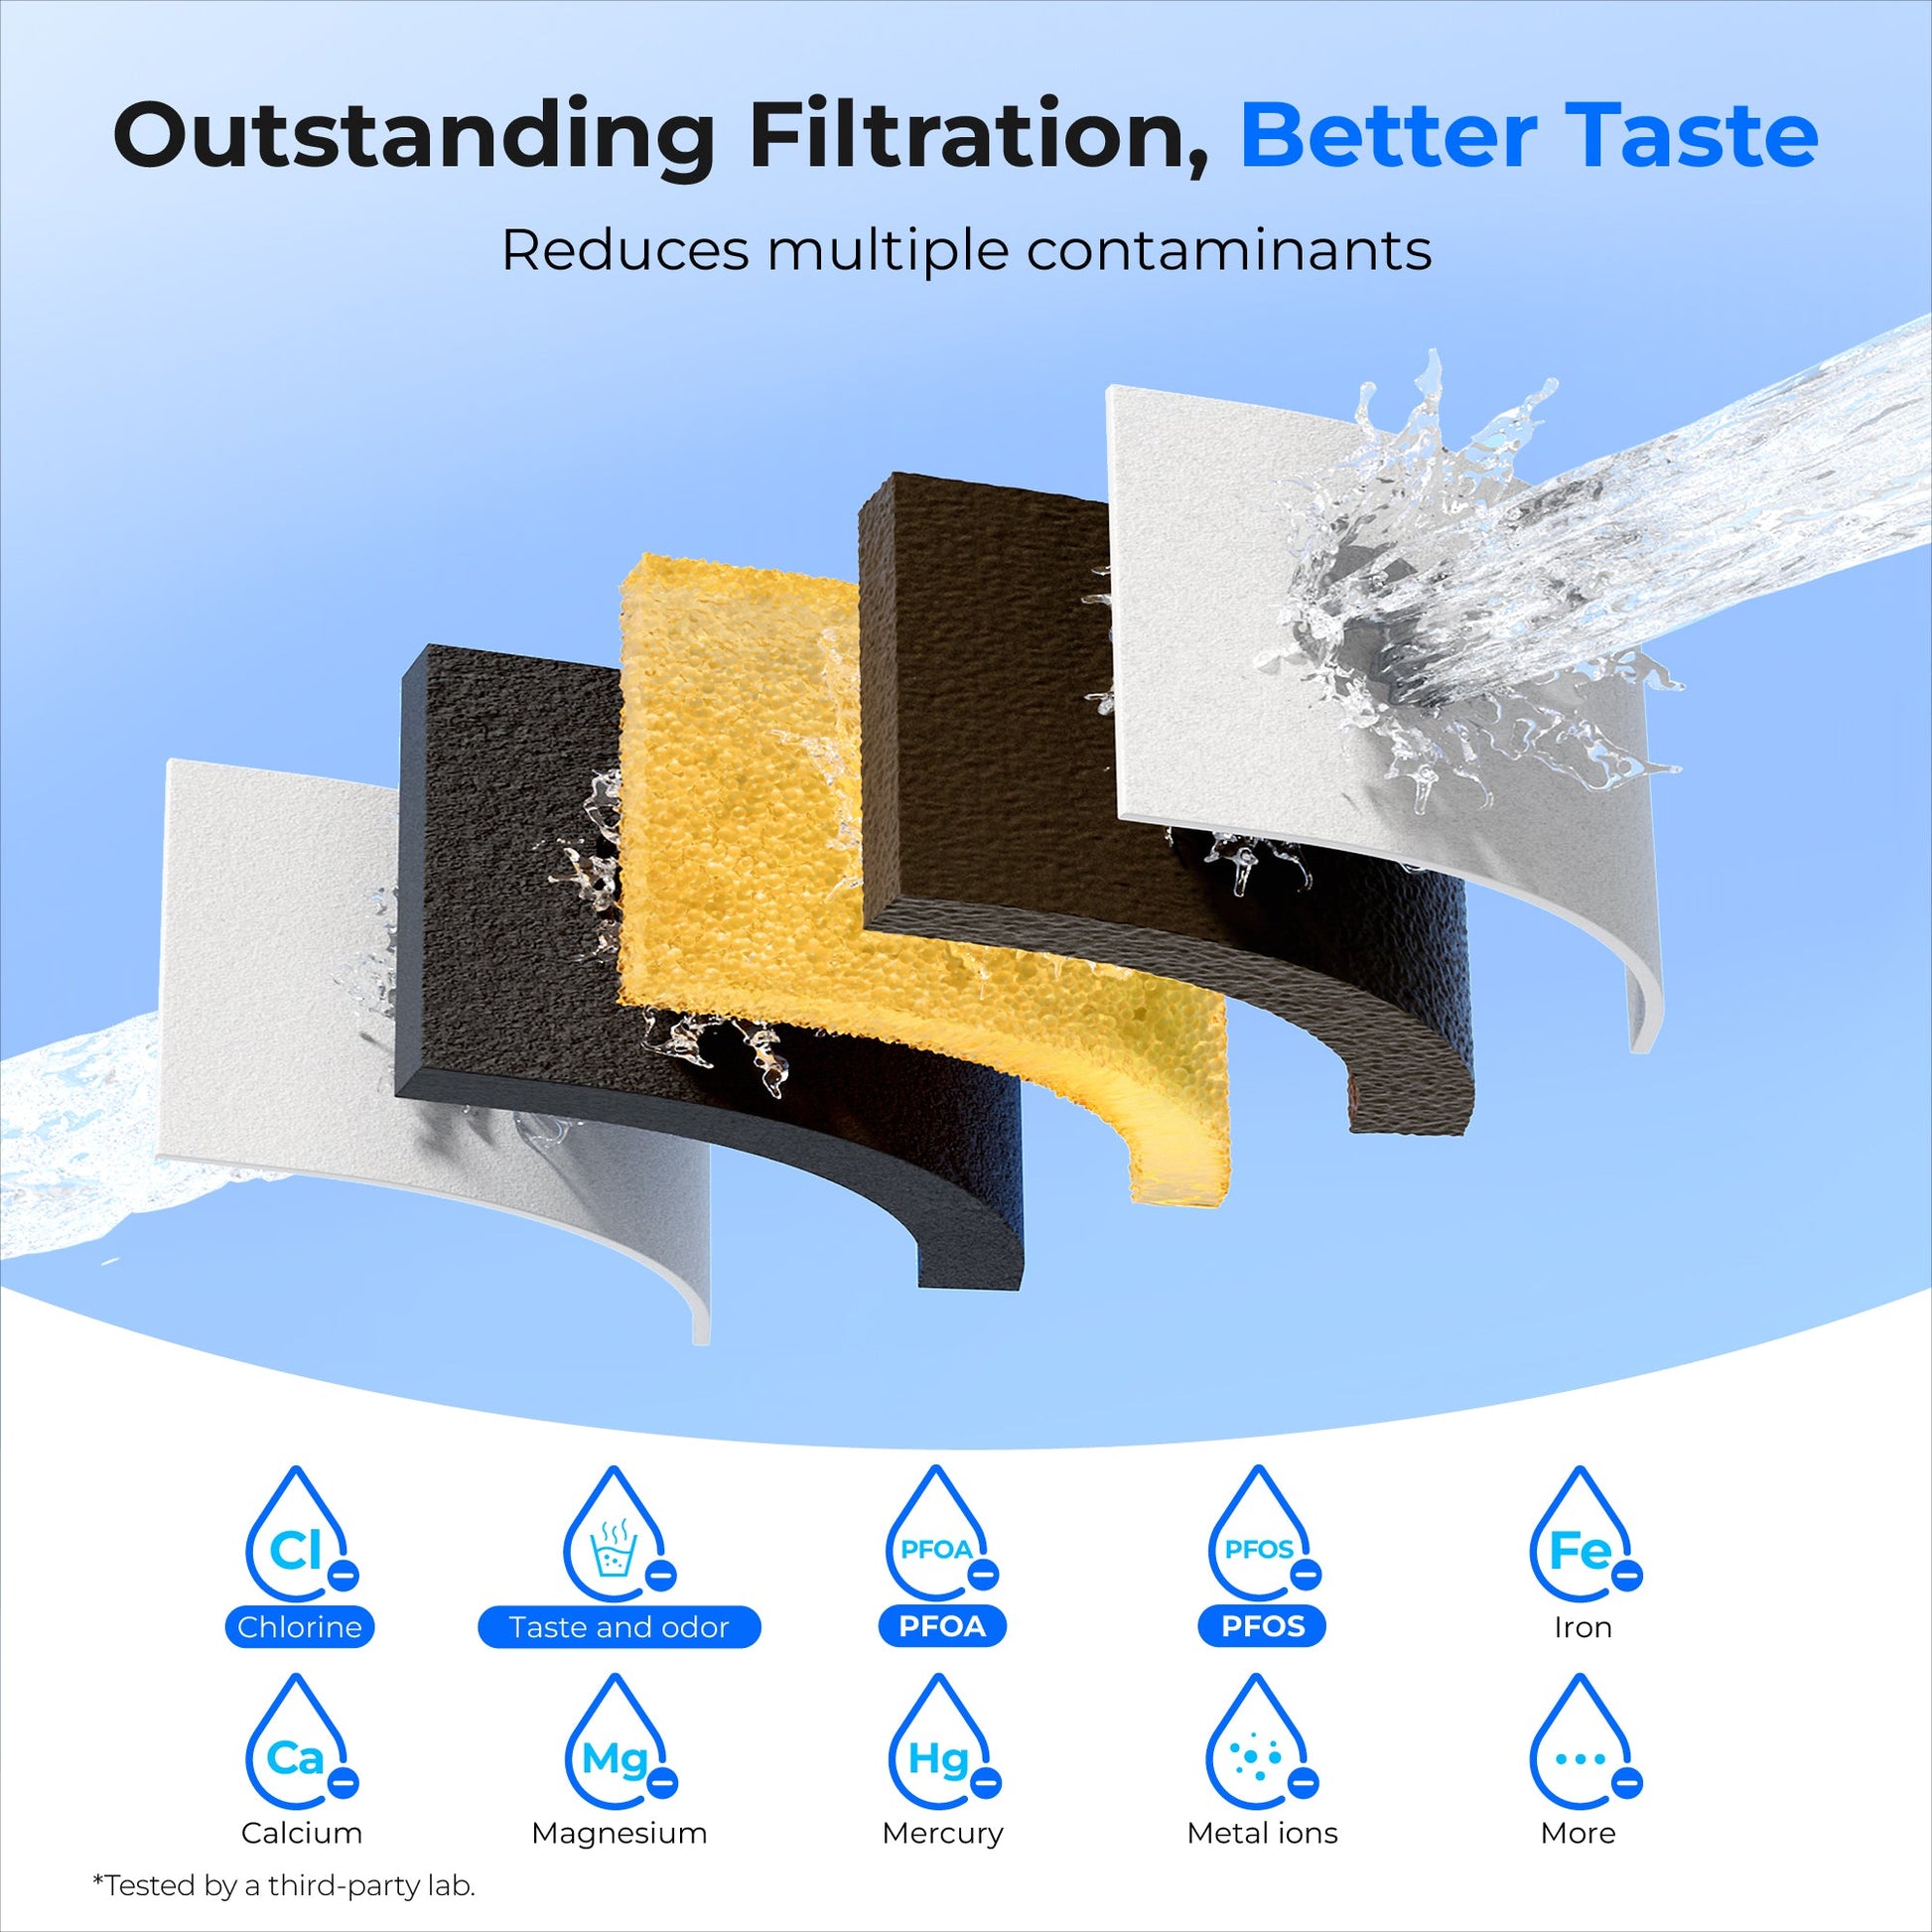 Waterdrop 200-Gallon Long-Life Water Filter Pitcher, NSF Certified Water Purifier